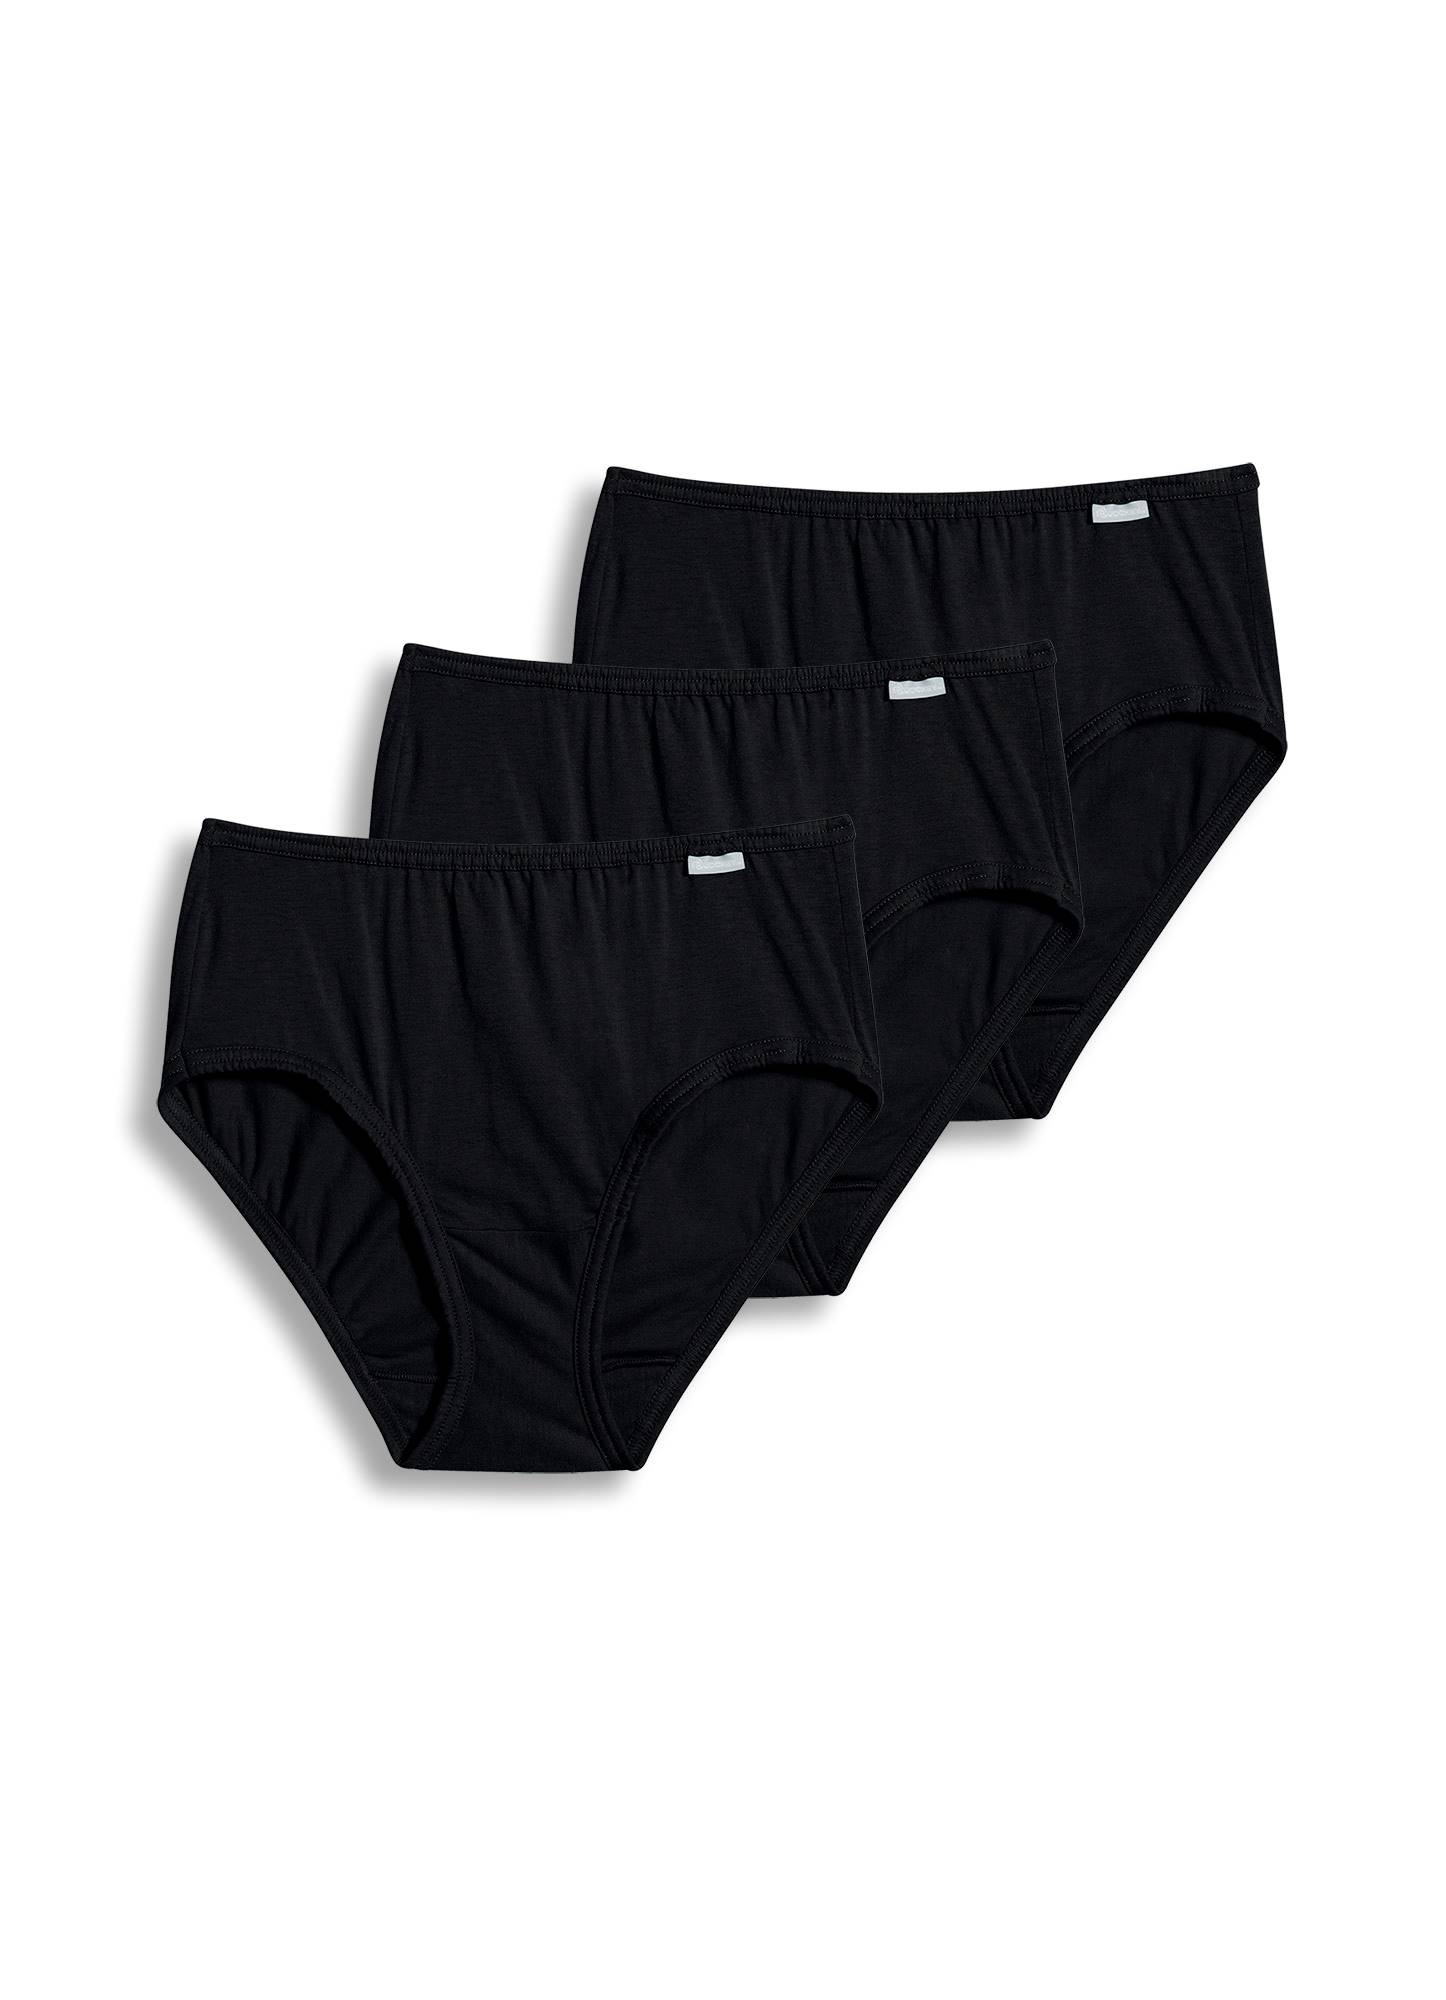 Jockey Elance String Bikini Underwear 3 Pack 1483 - Oatmeal